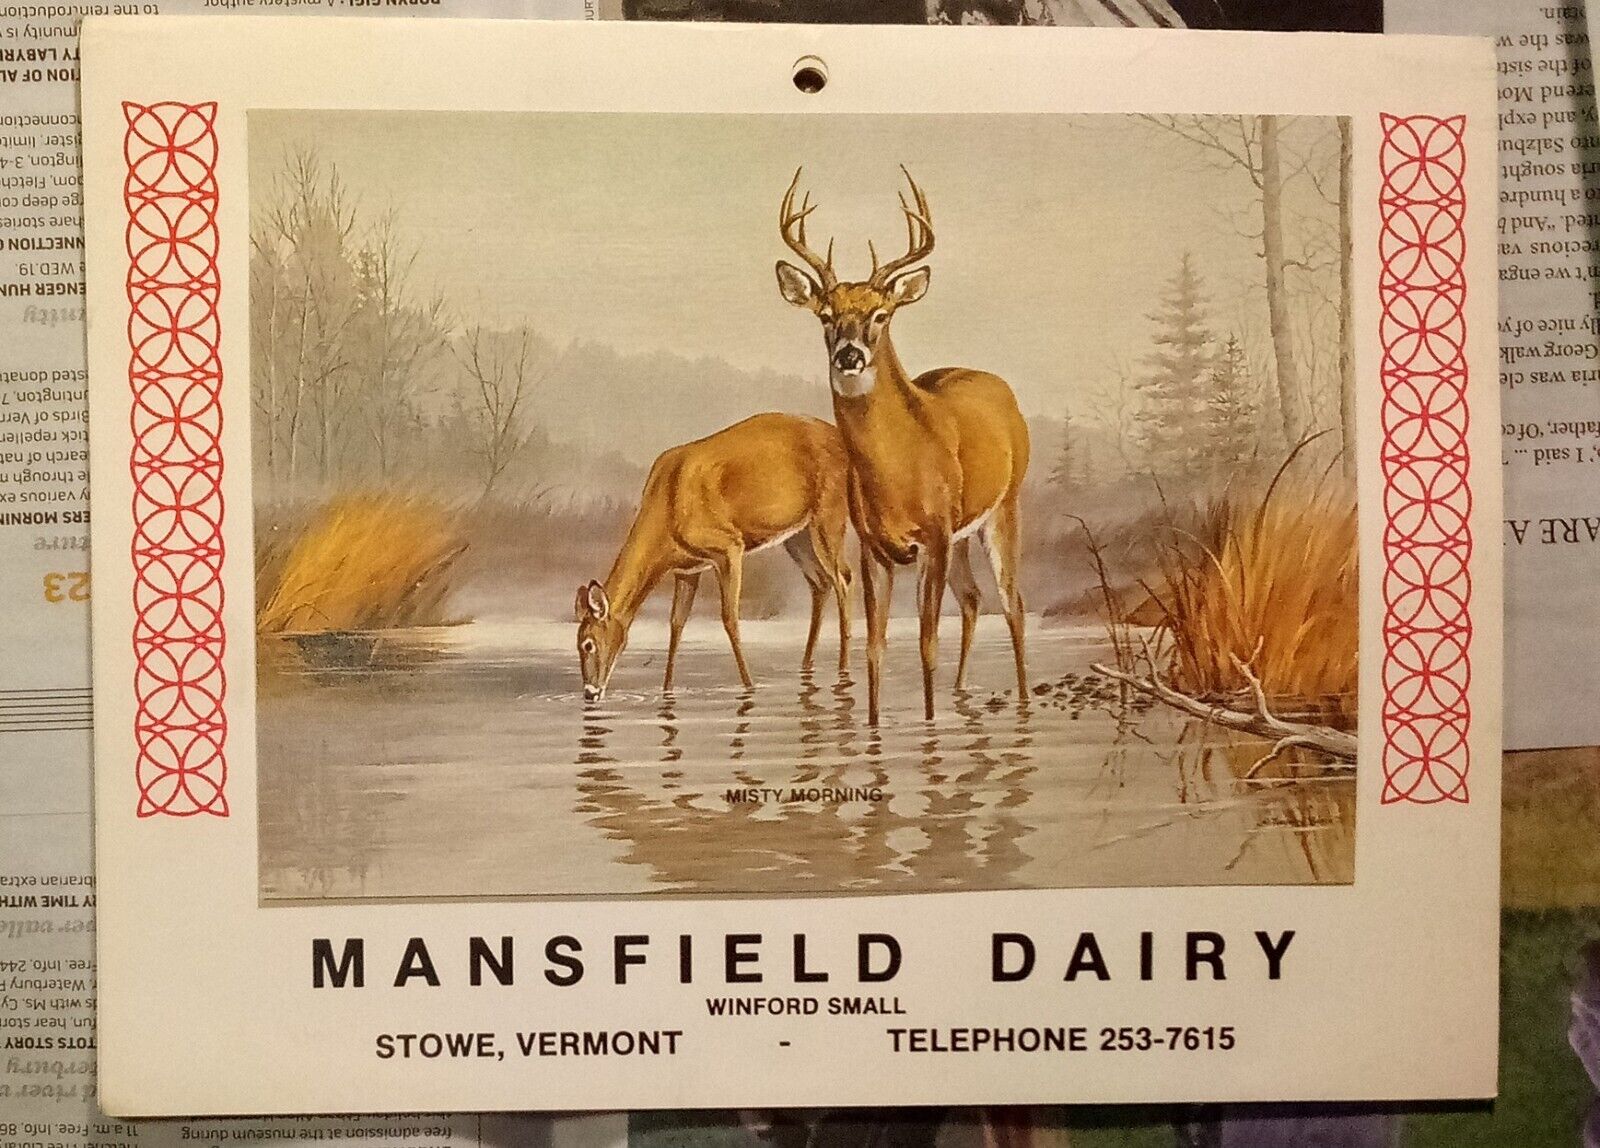 Mansfield Dairy Stowe Vermont 1978 Calendar